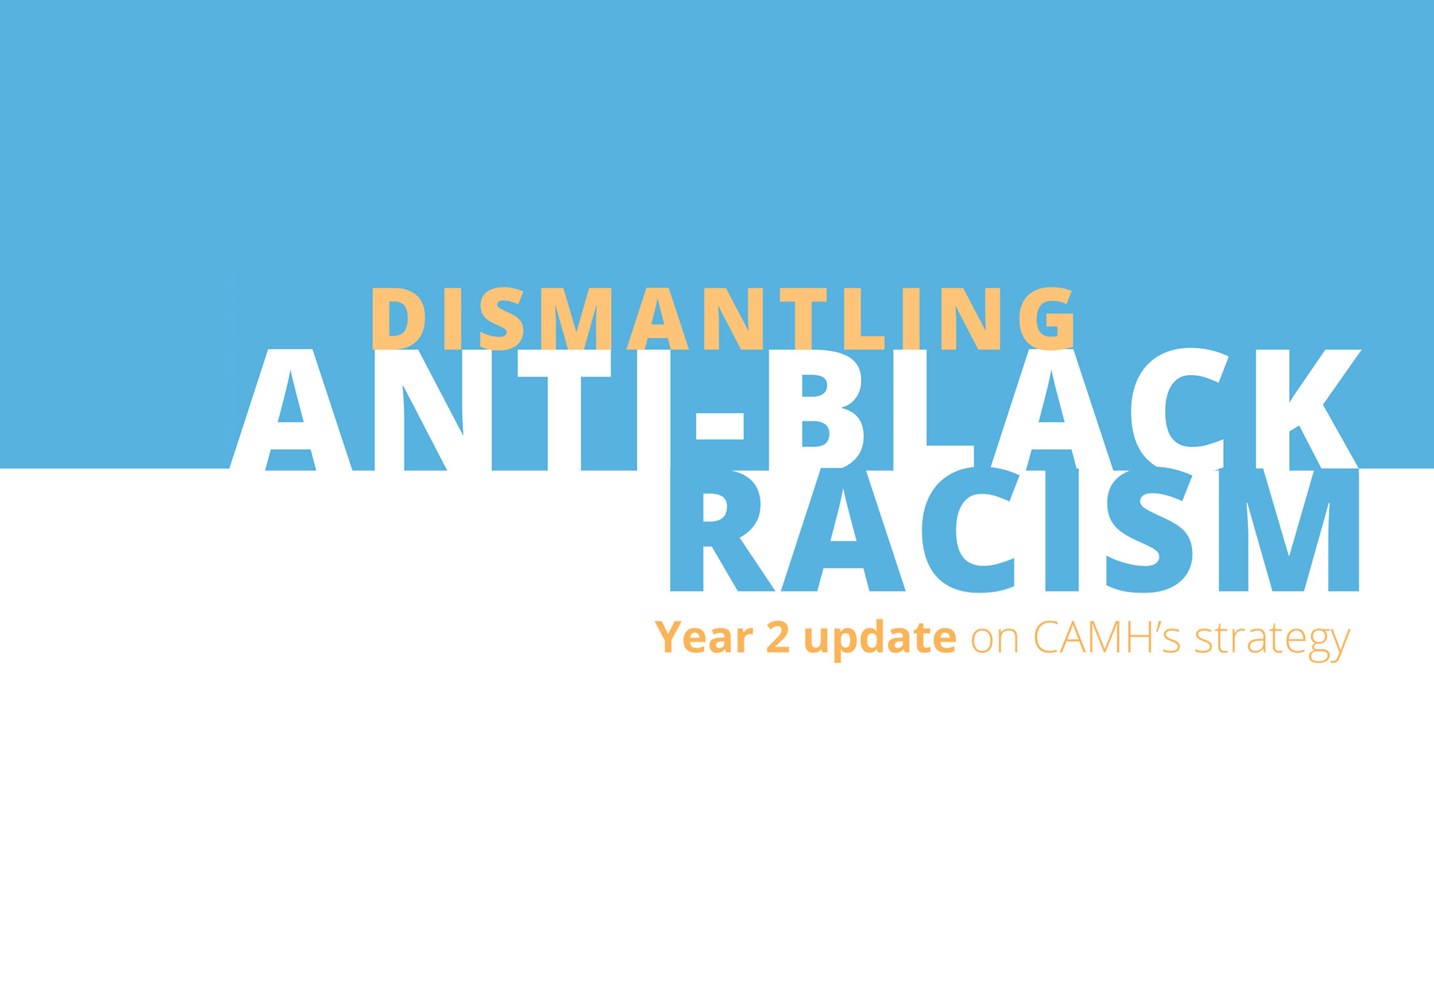 Dismantling Anti-Black Racism - Year 2 Update